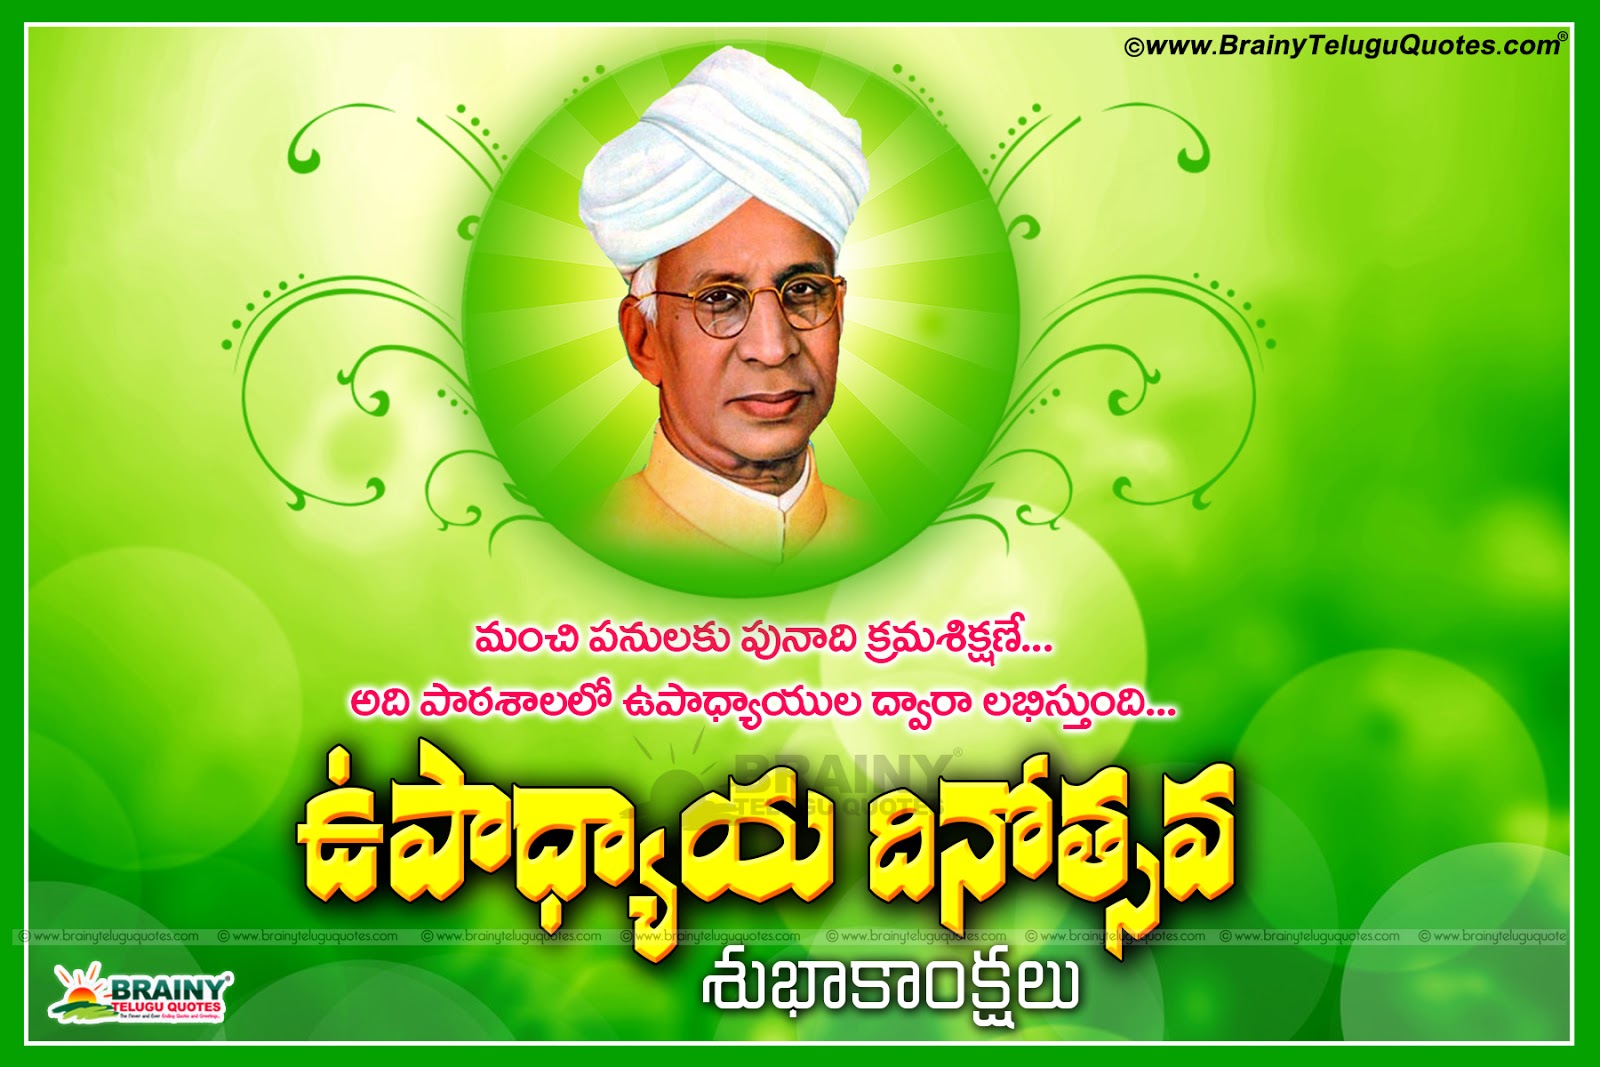 Telugu New Teachers Day Whatsapp Images, Teachers Day - Happy Teachers Day Quote Telugu - HD Wallpaper 